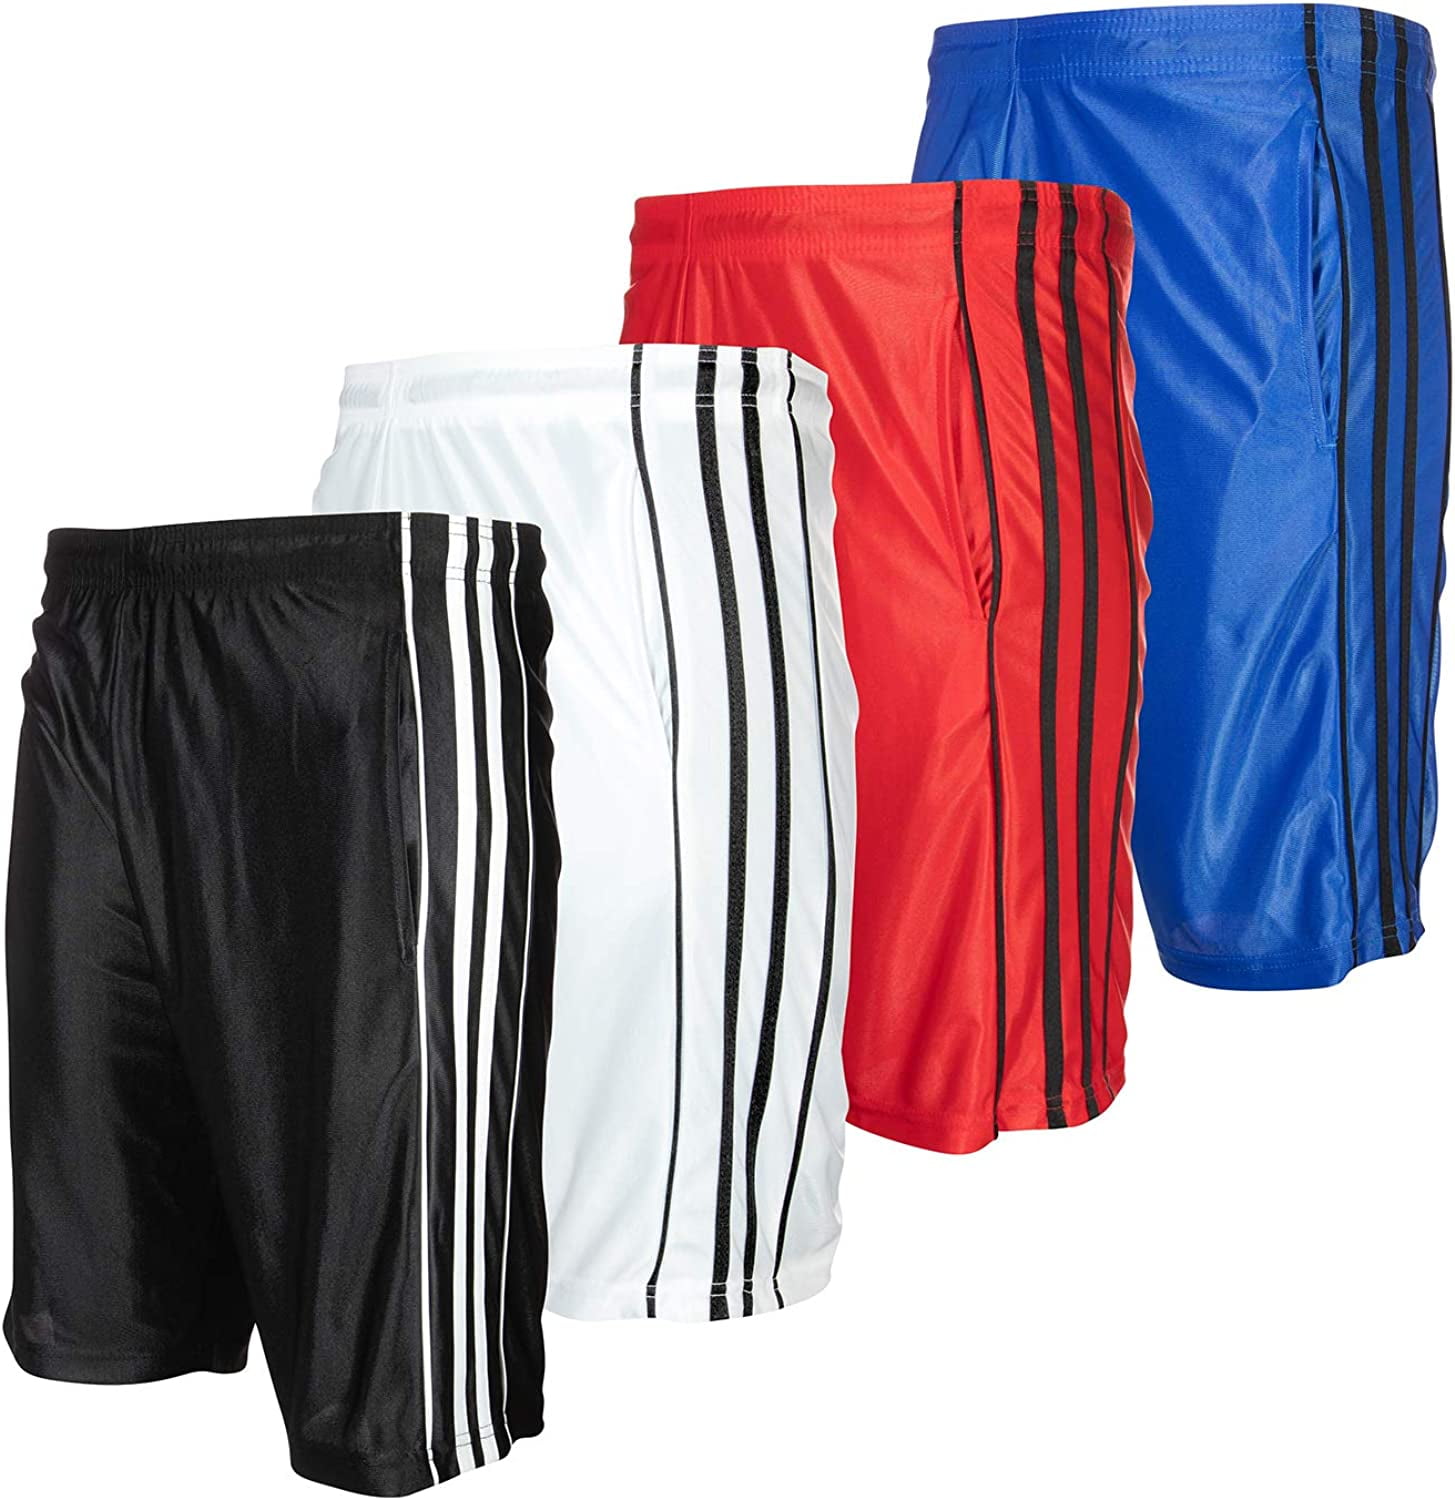 Men's Tek Gear® Laser-Cut Basketball Shorts